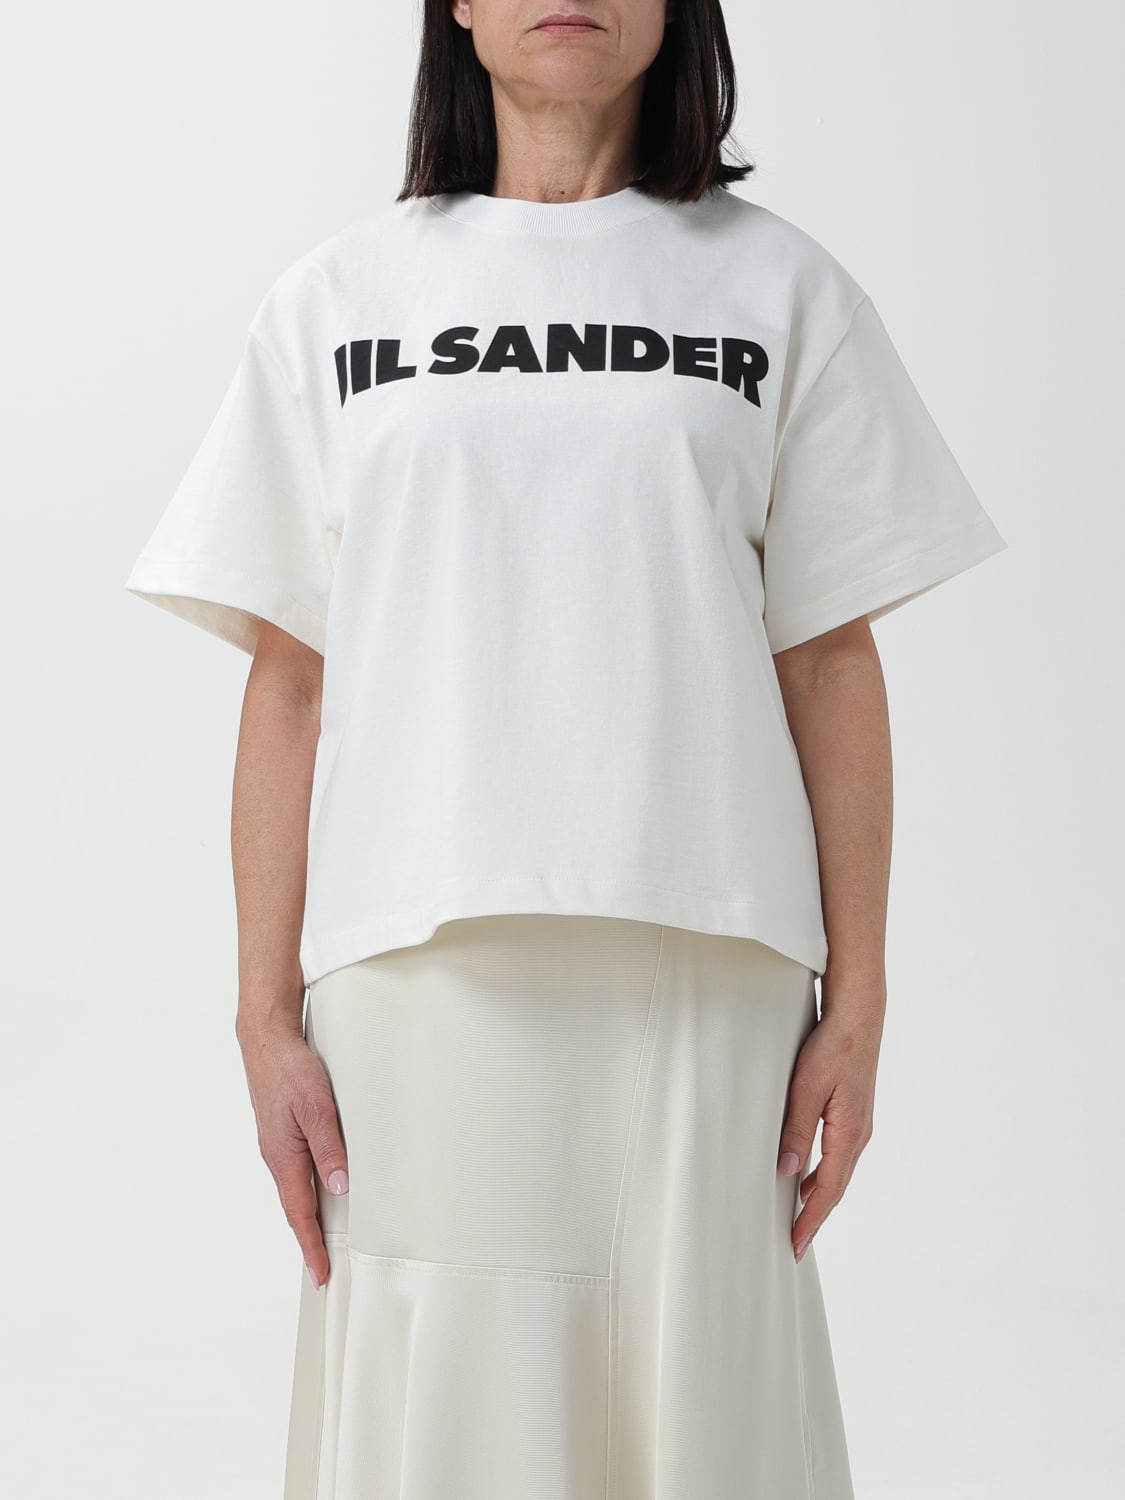 JIL SANDER＋ Tシャツ(2枚セット)着丈71cm